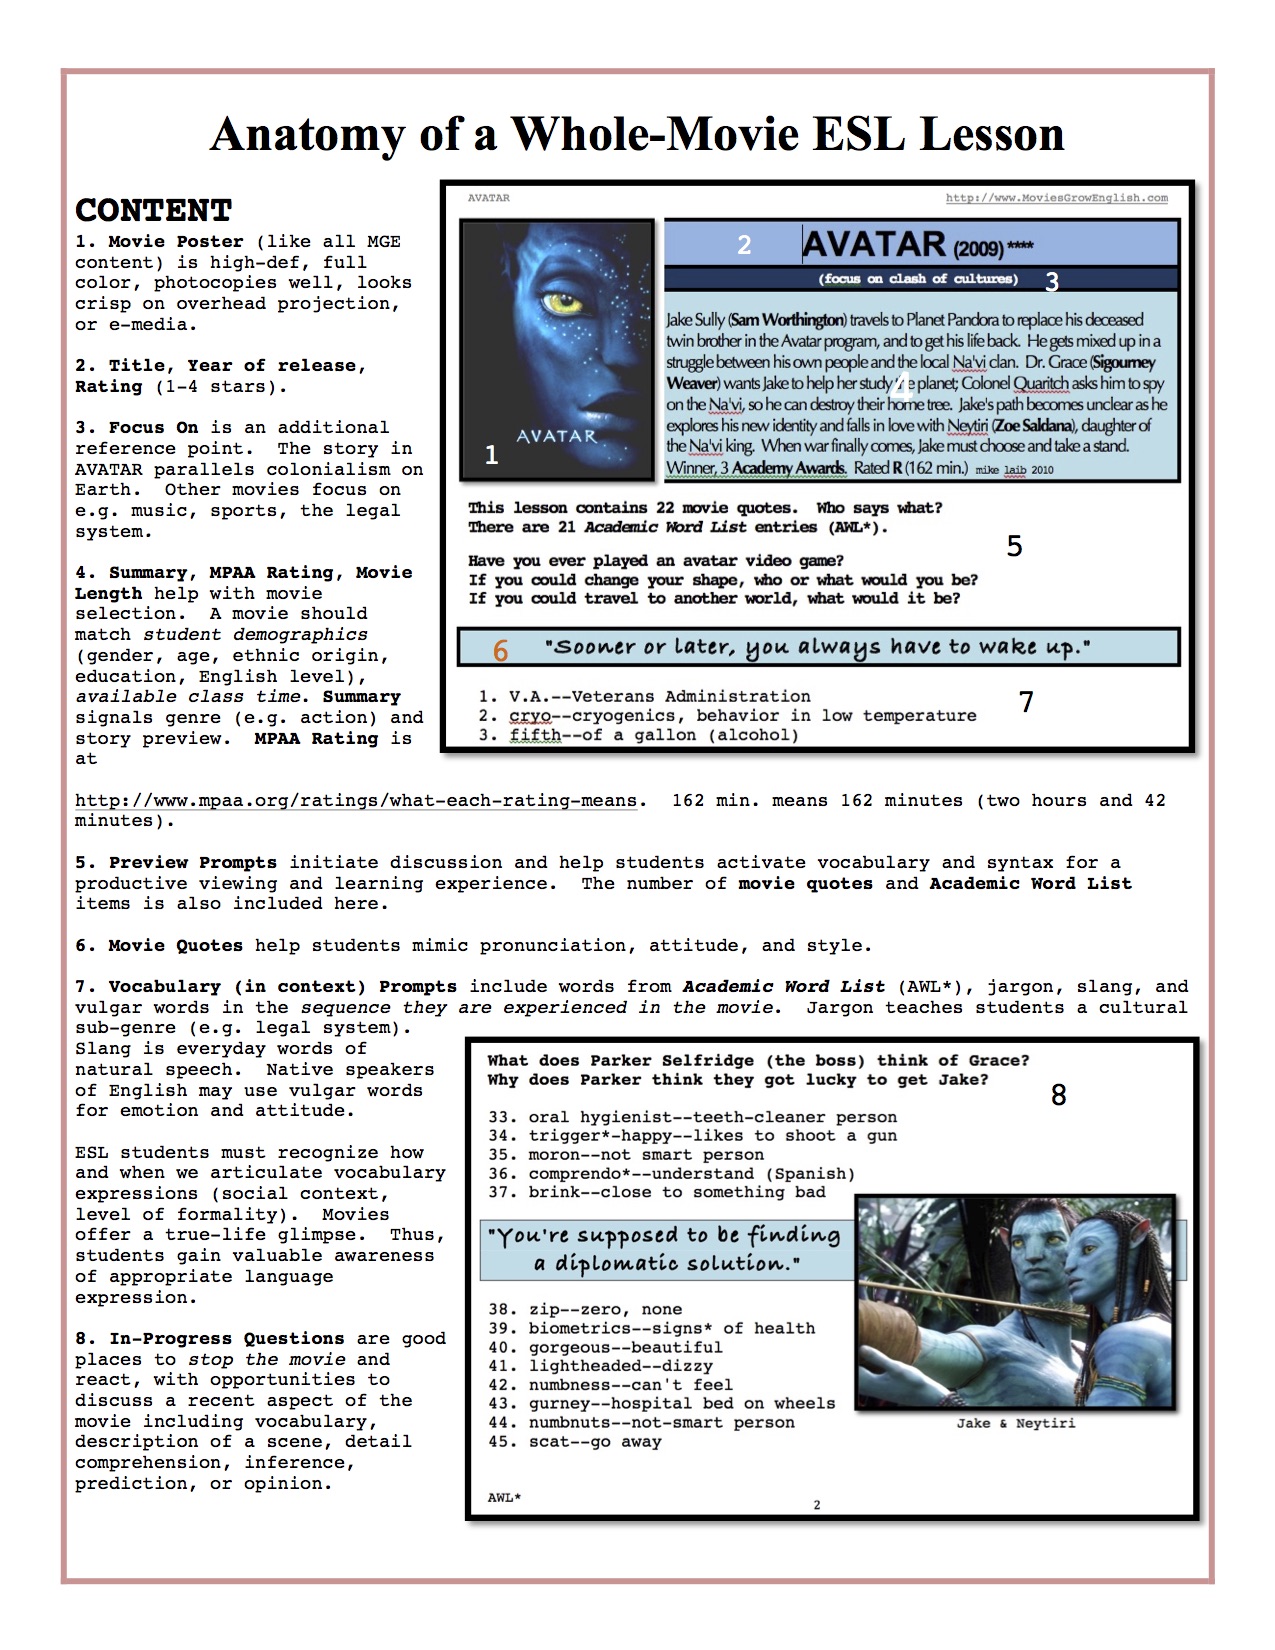 Anatomy of a Whole-Movie ESL/EFL Lesson Page 1